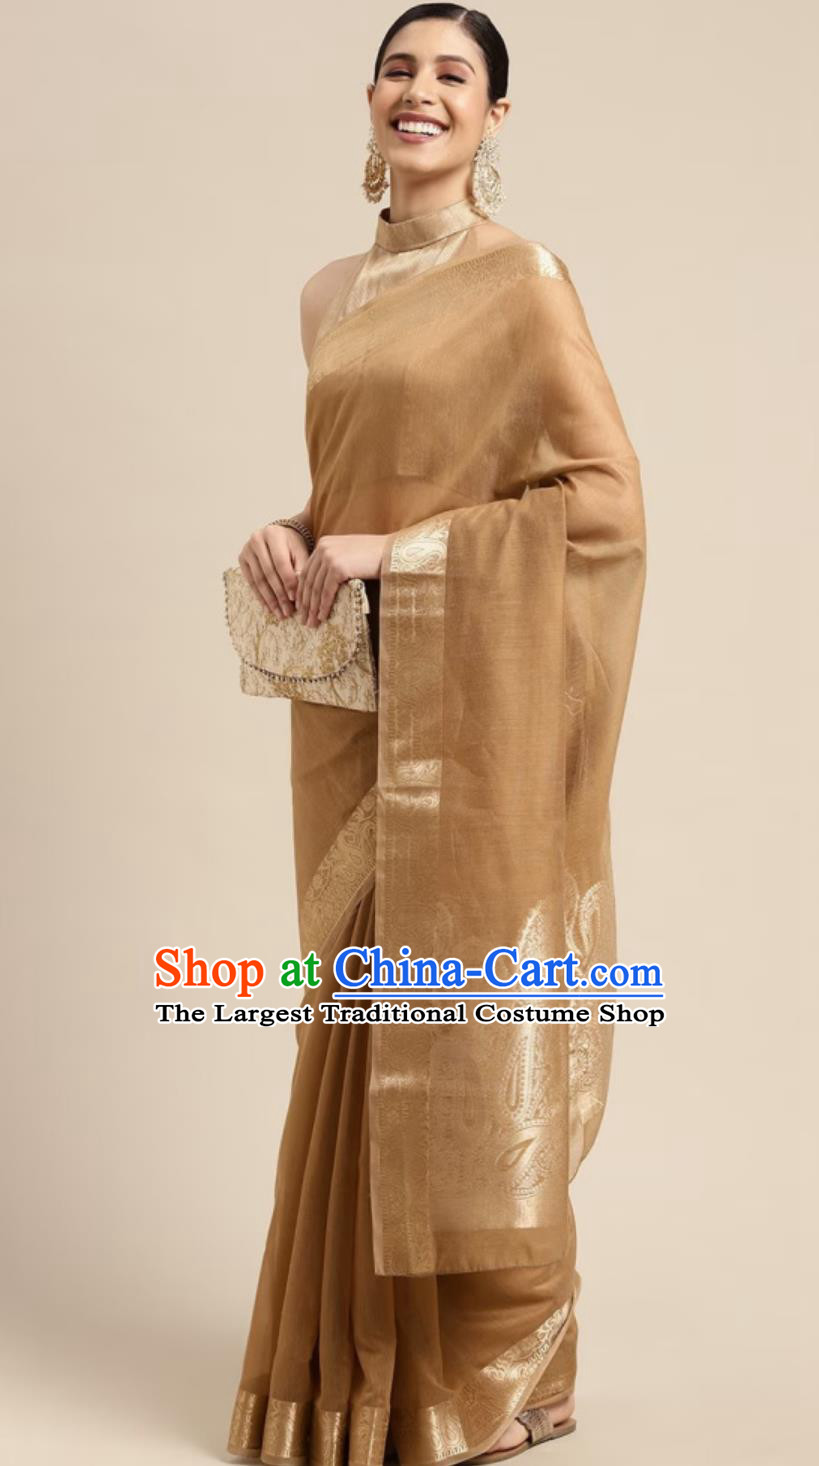 India Woman Costume Indian National Clothing Traditional Festival Dark Golden Sari Dress